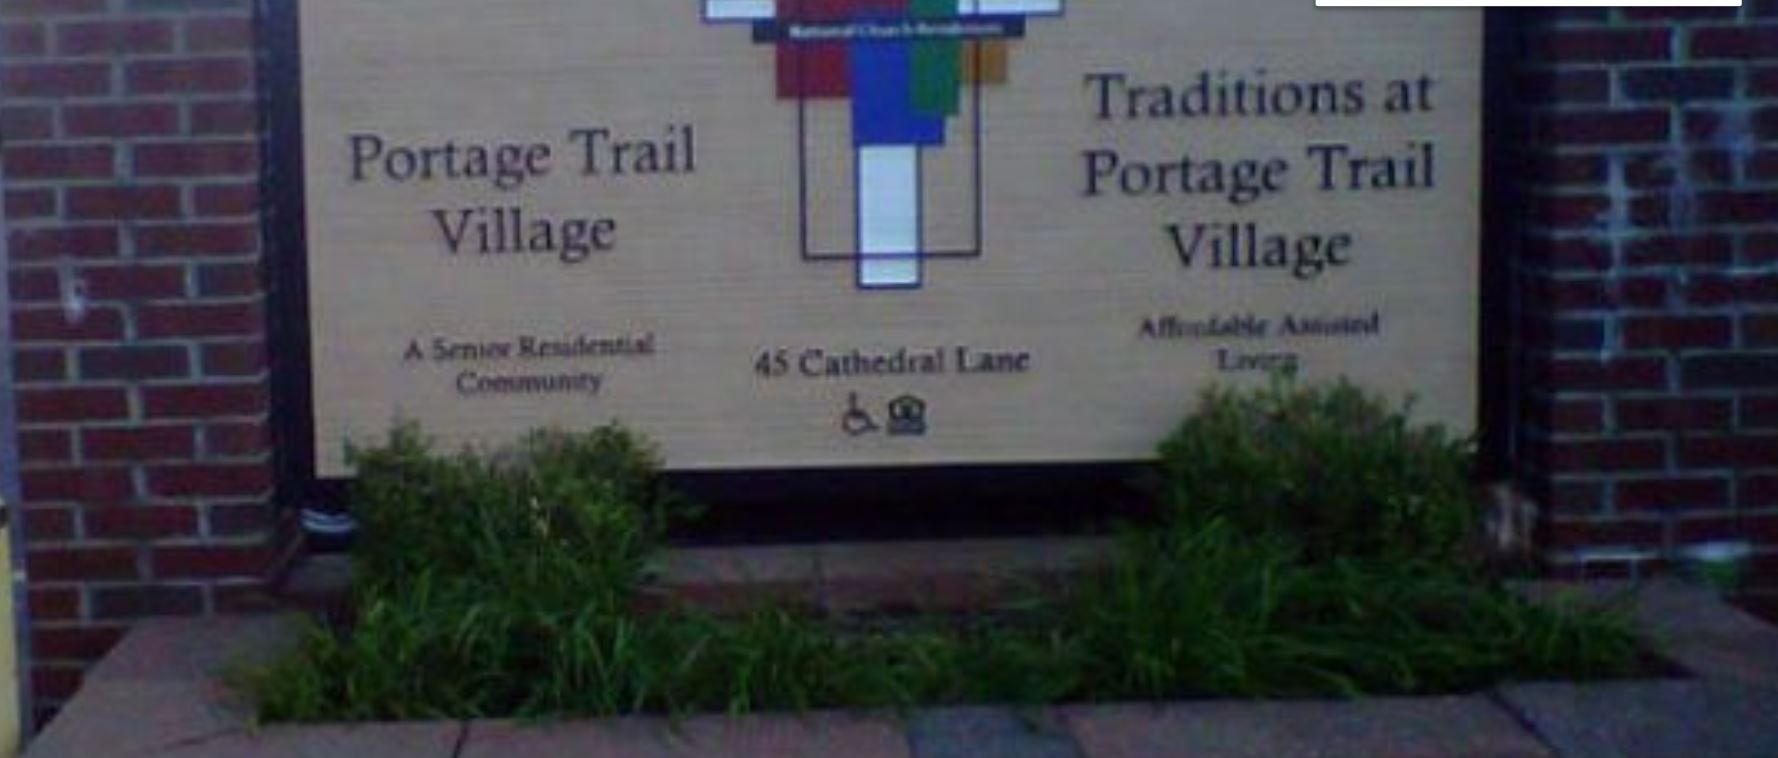 National Church Residences Portage Trail Village 5